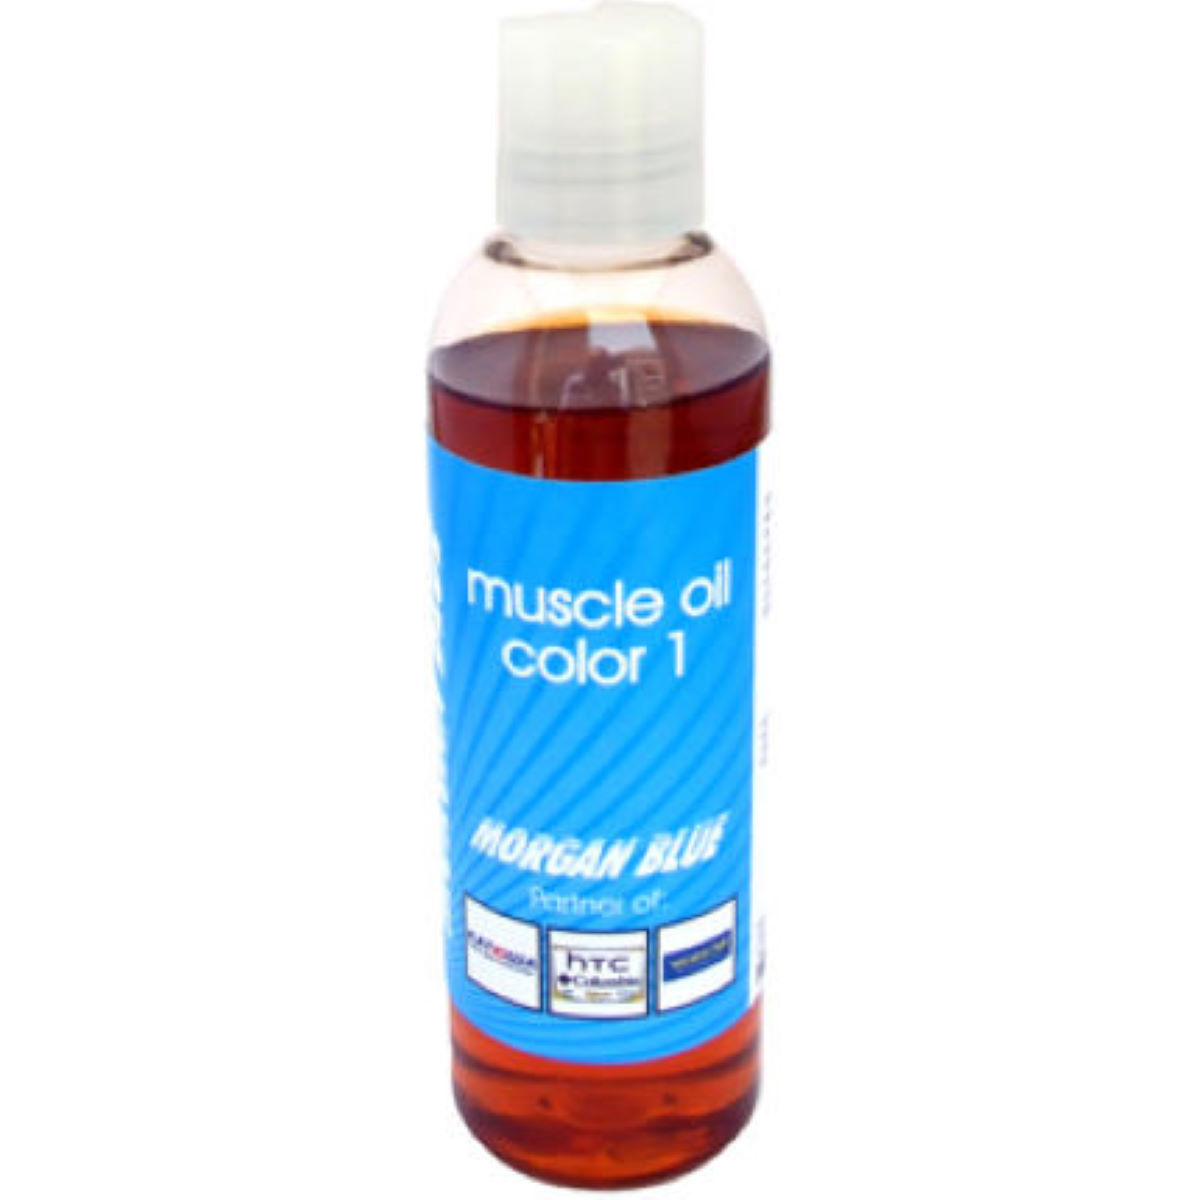 Aceite muscular Morgan Blue Muscle Oil Color 1 (200 ml) - Lociones musculares